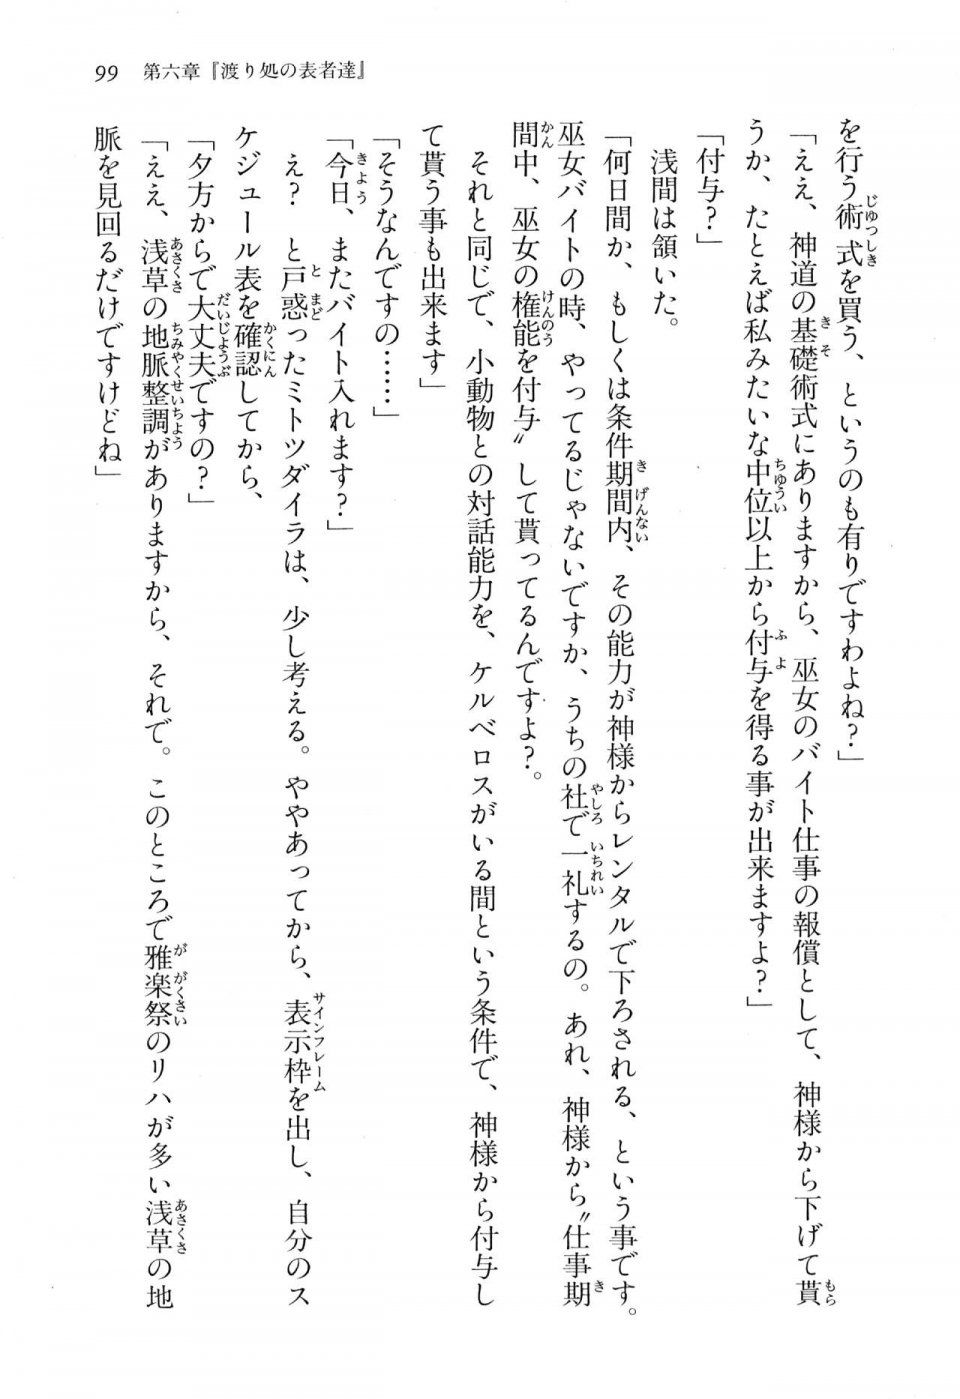 Kyoukai Senjou no Horizon BD Special Mininovel Vol 2(1B) - Photo #103